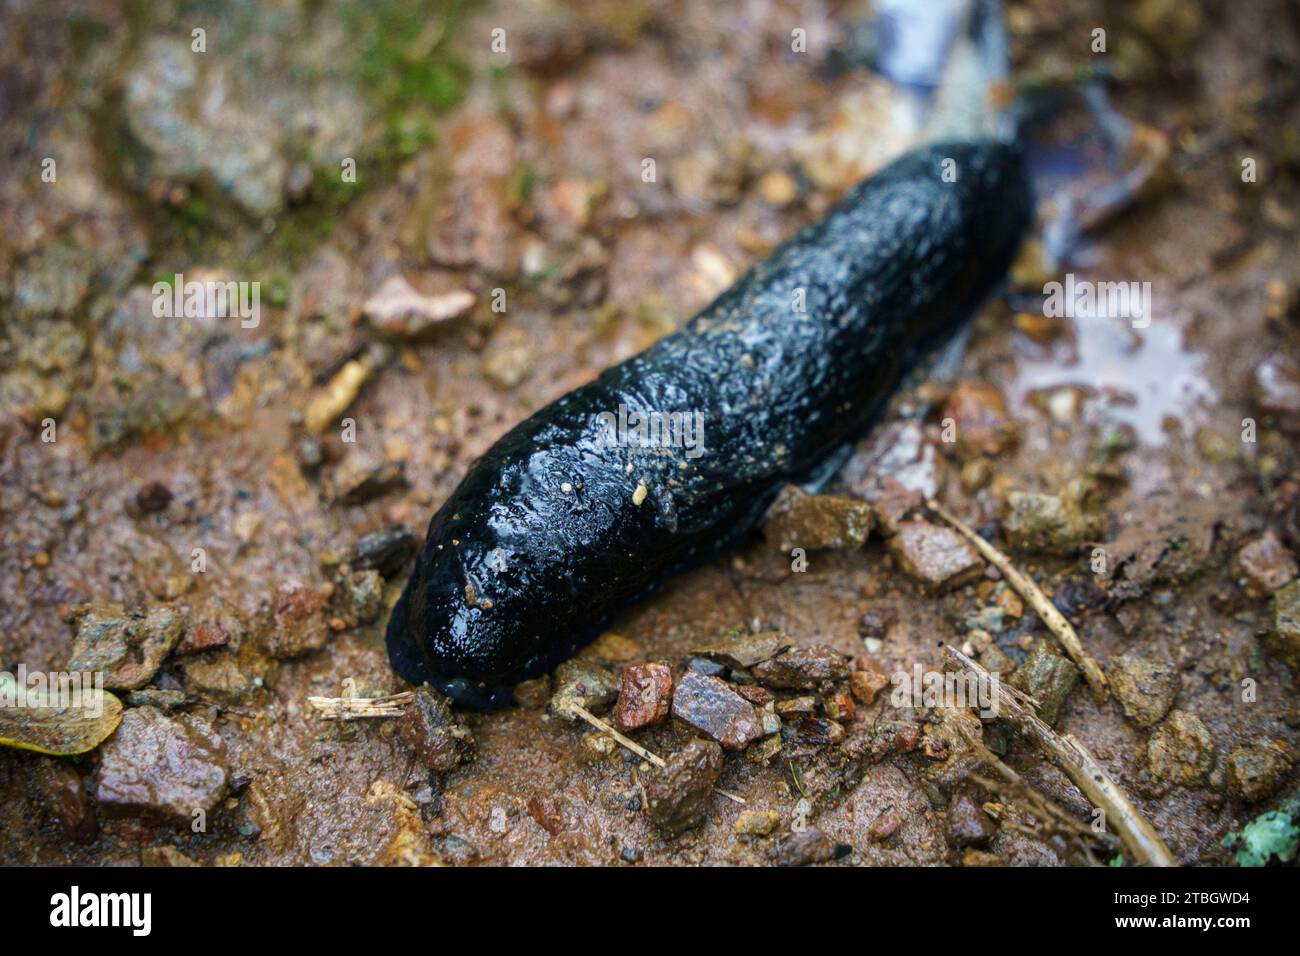 Close up of a black slug on wet dirt ground Stock Photo